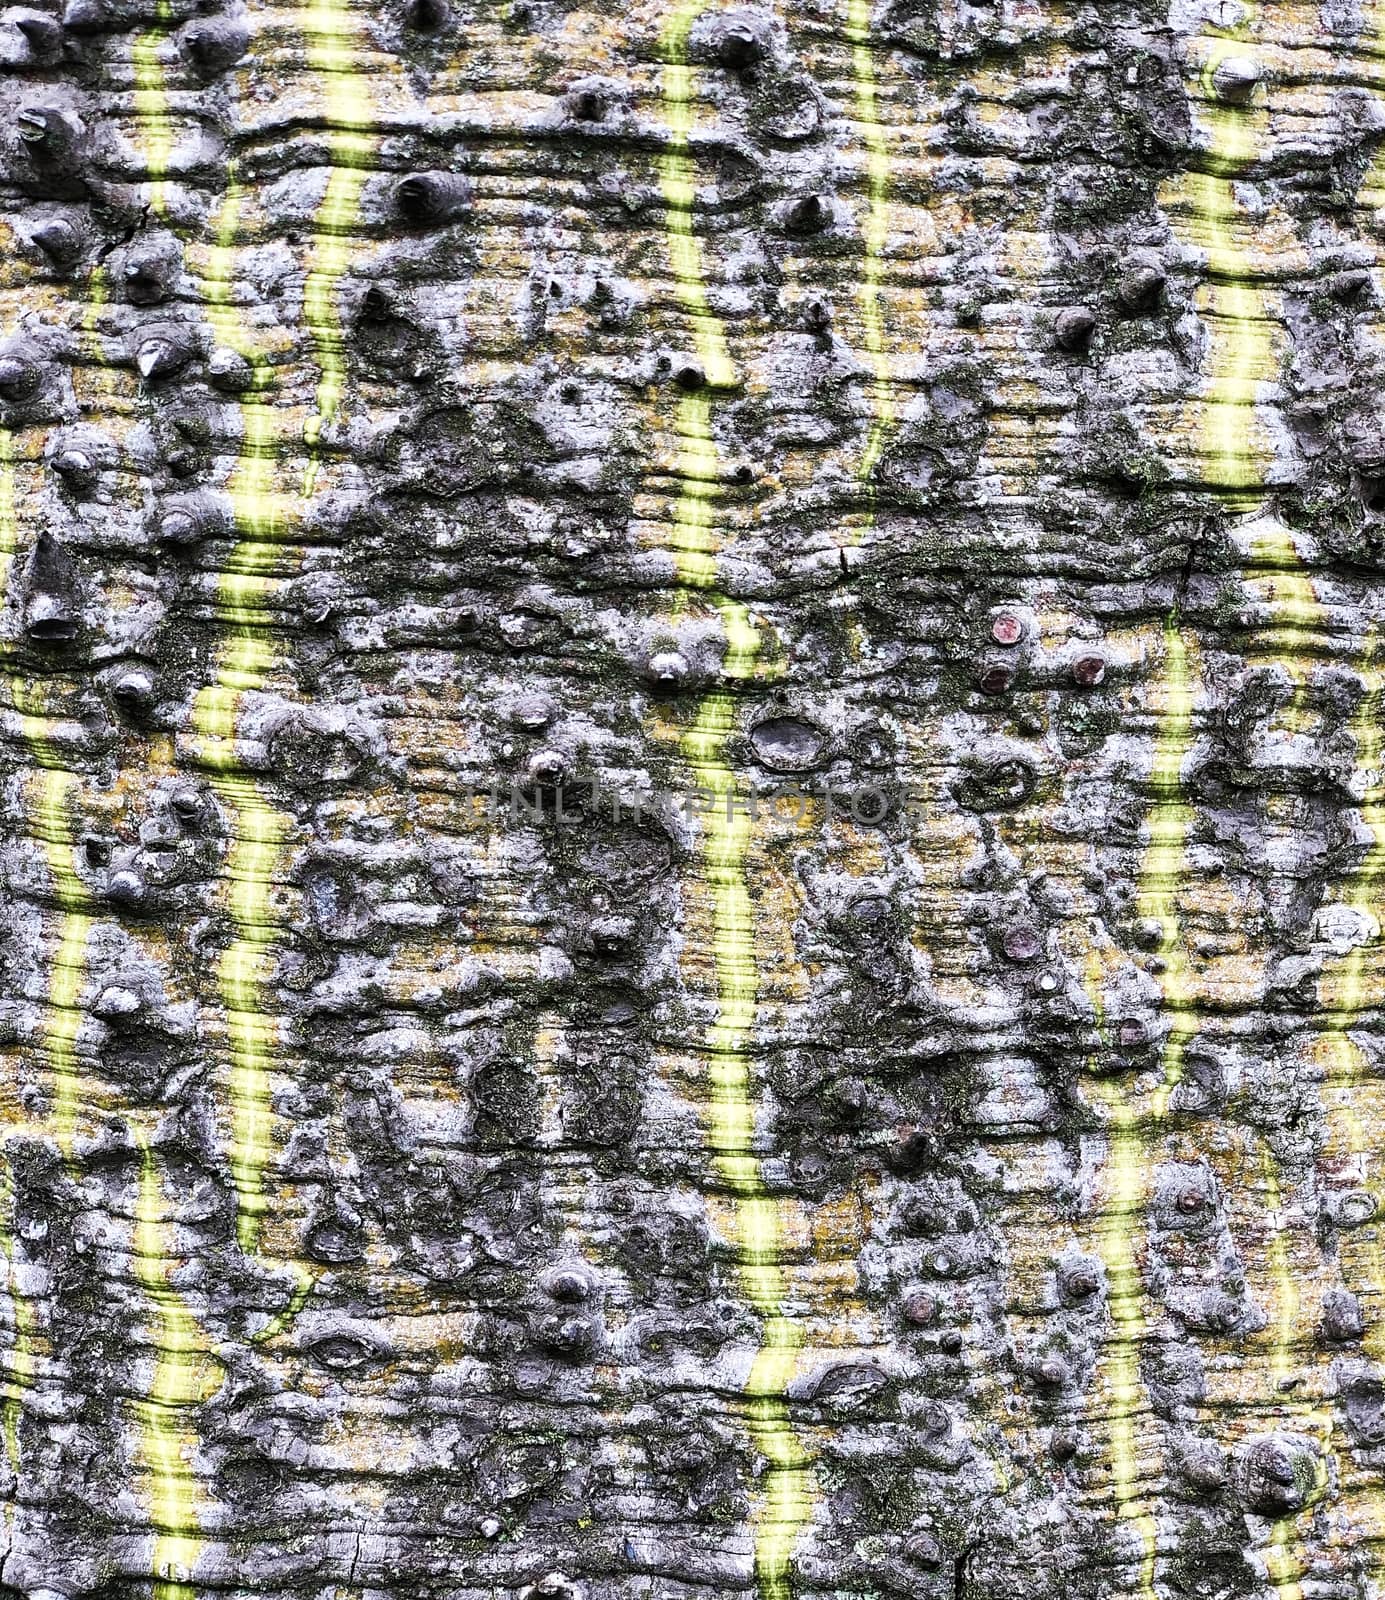 Tree bark texture closeup shot in a sunny day by F1b0nacci